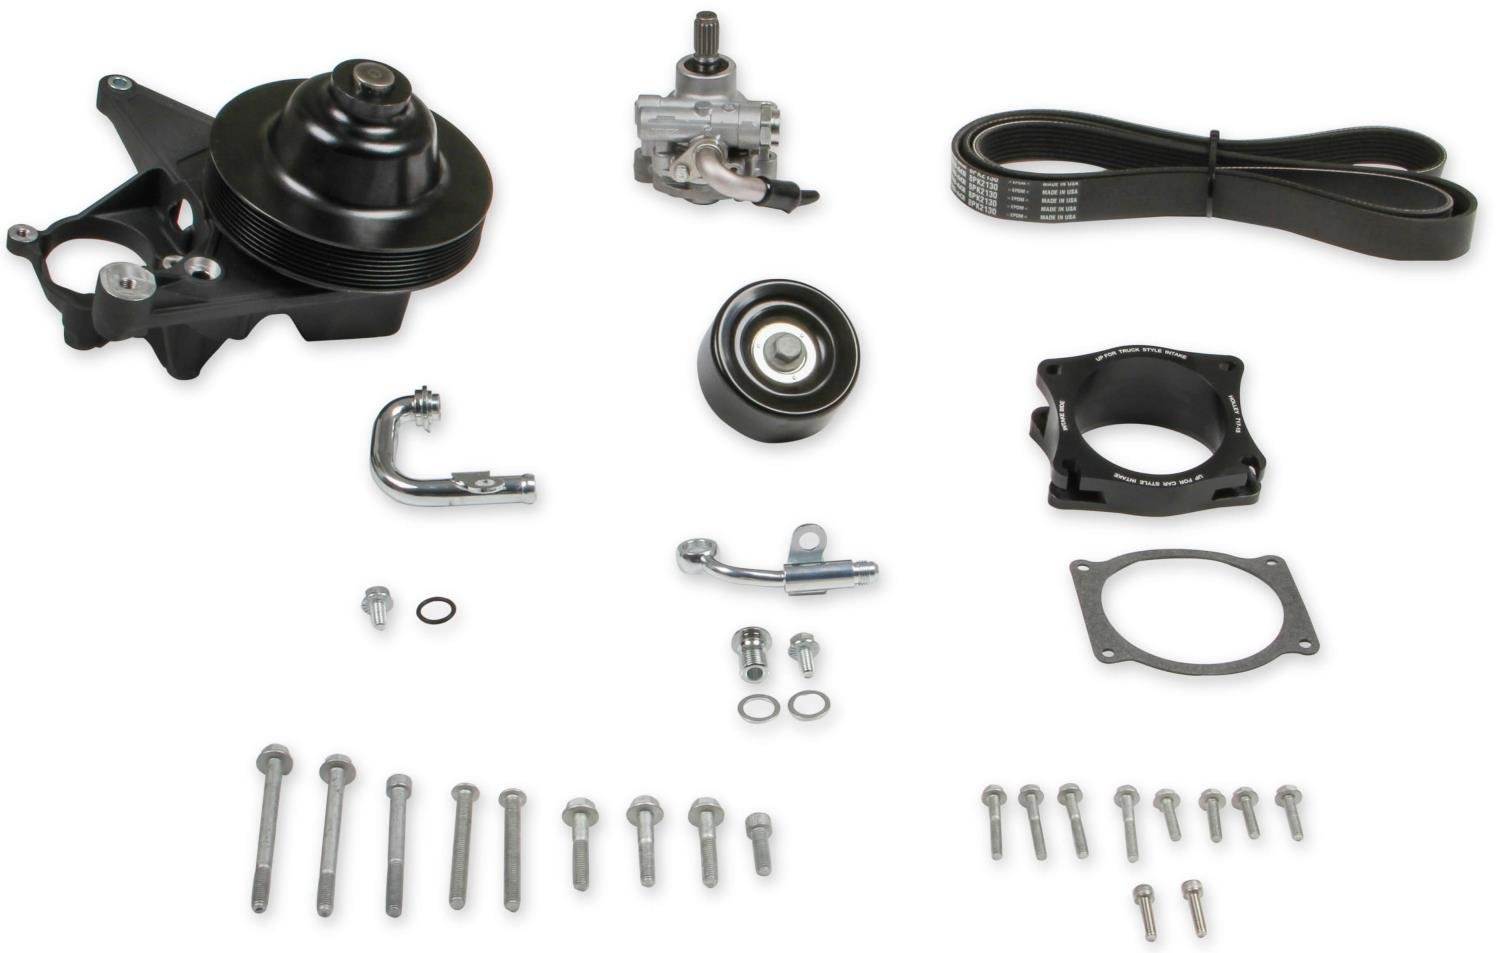 Retro-Fit Hydraulic Power Steering Kit for GM Gen V LT4